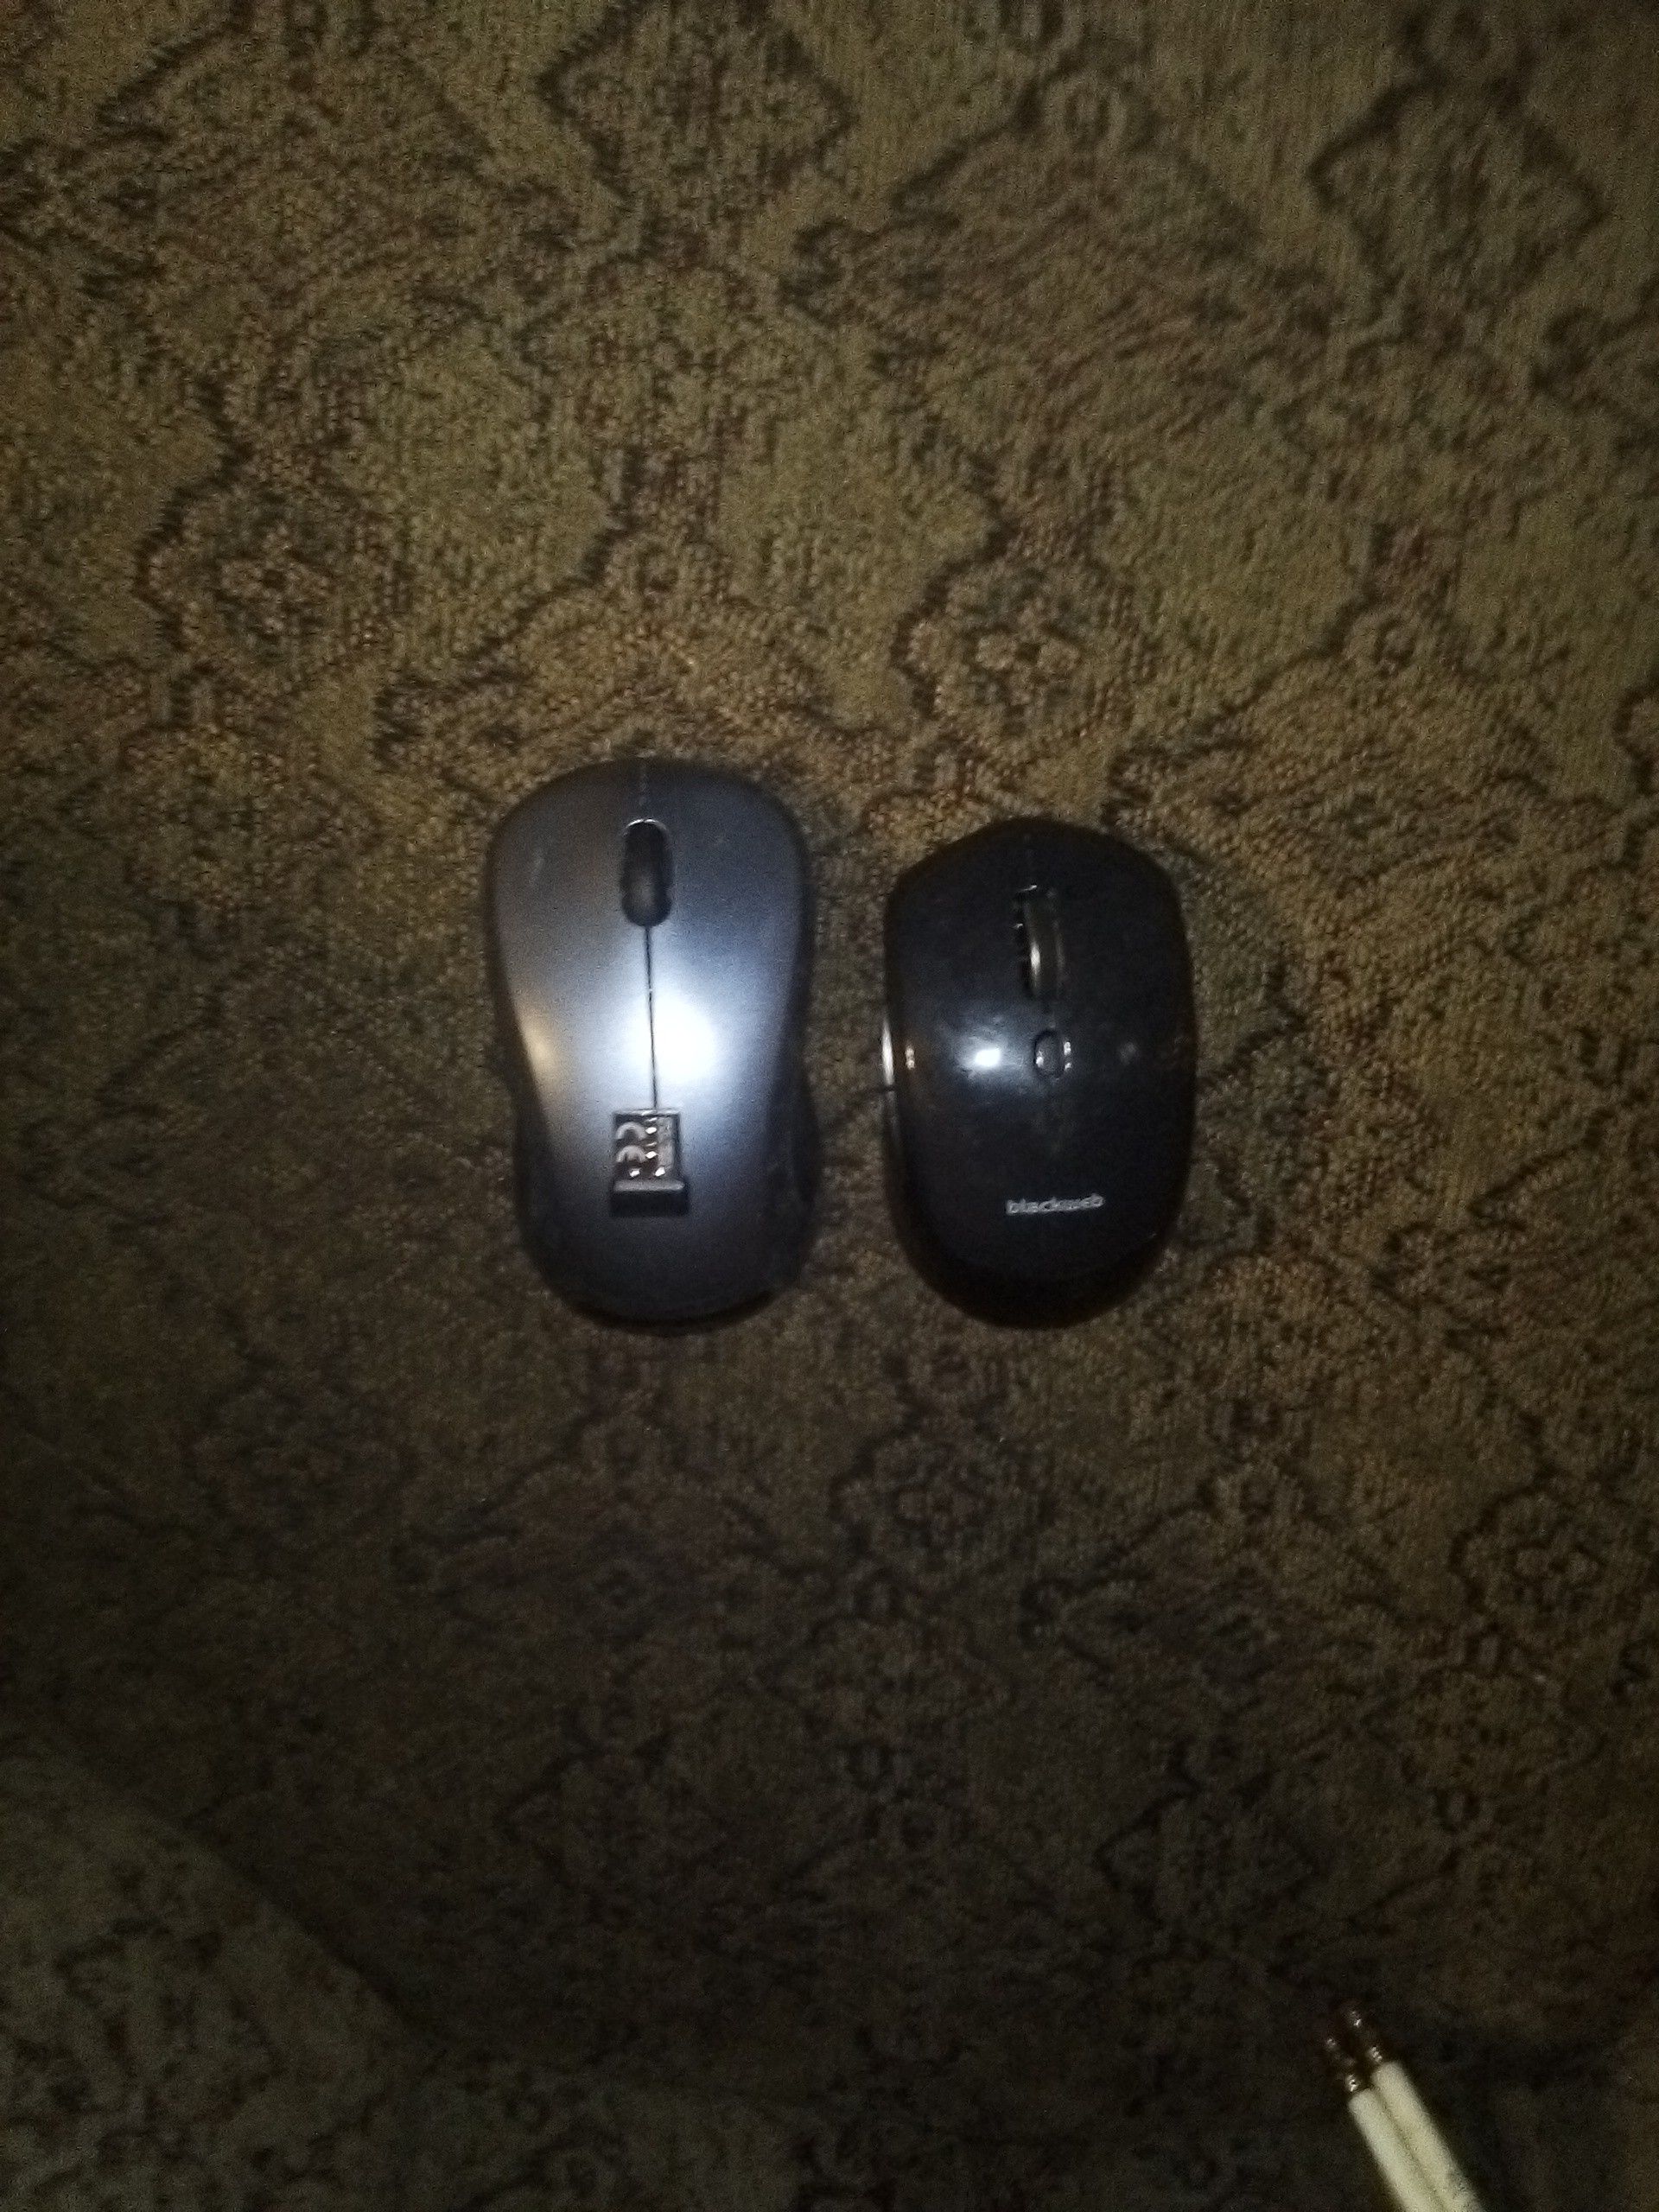 2 computer mice